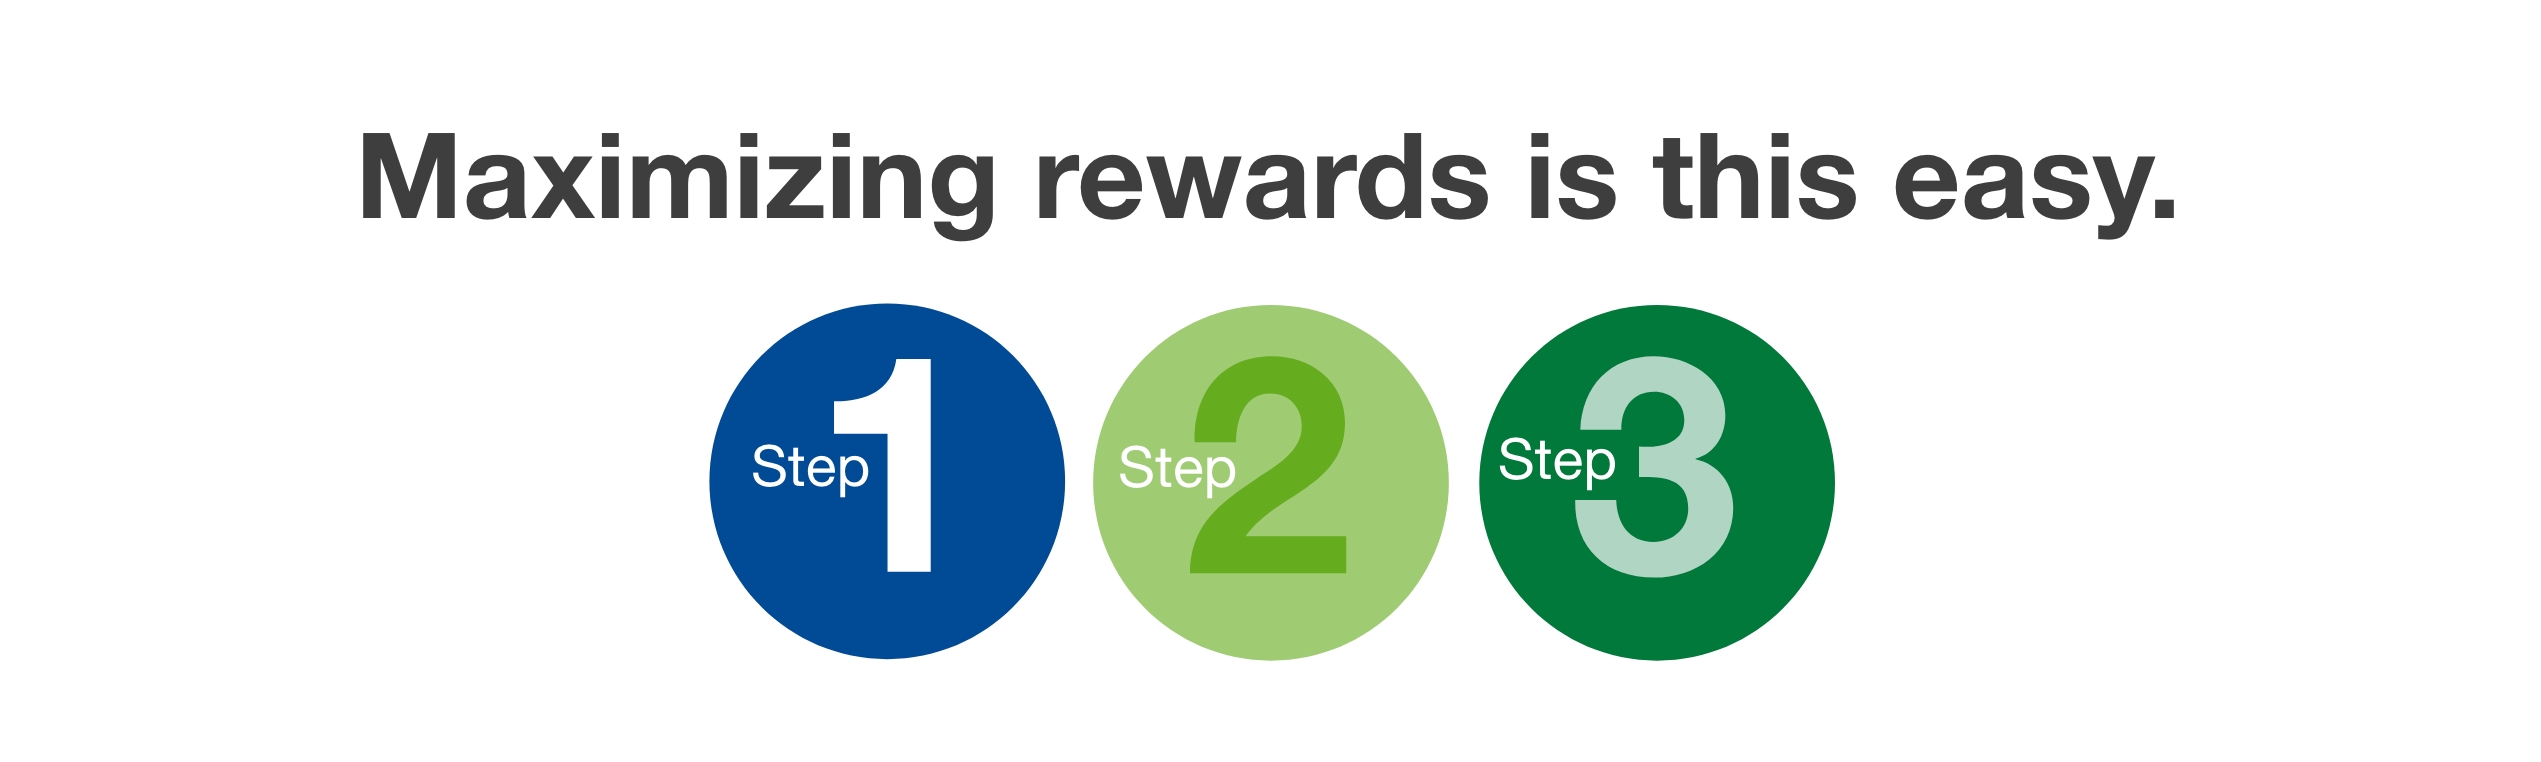 Maximizing rewards is this easy.